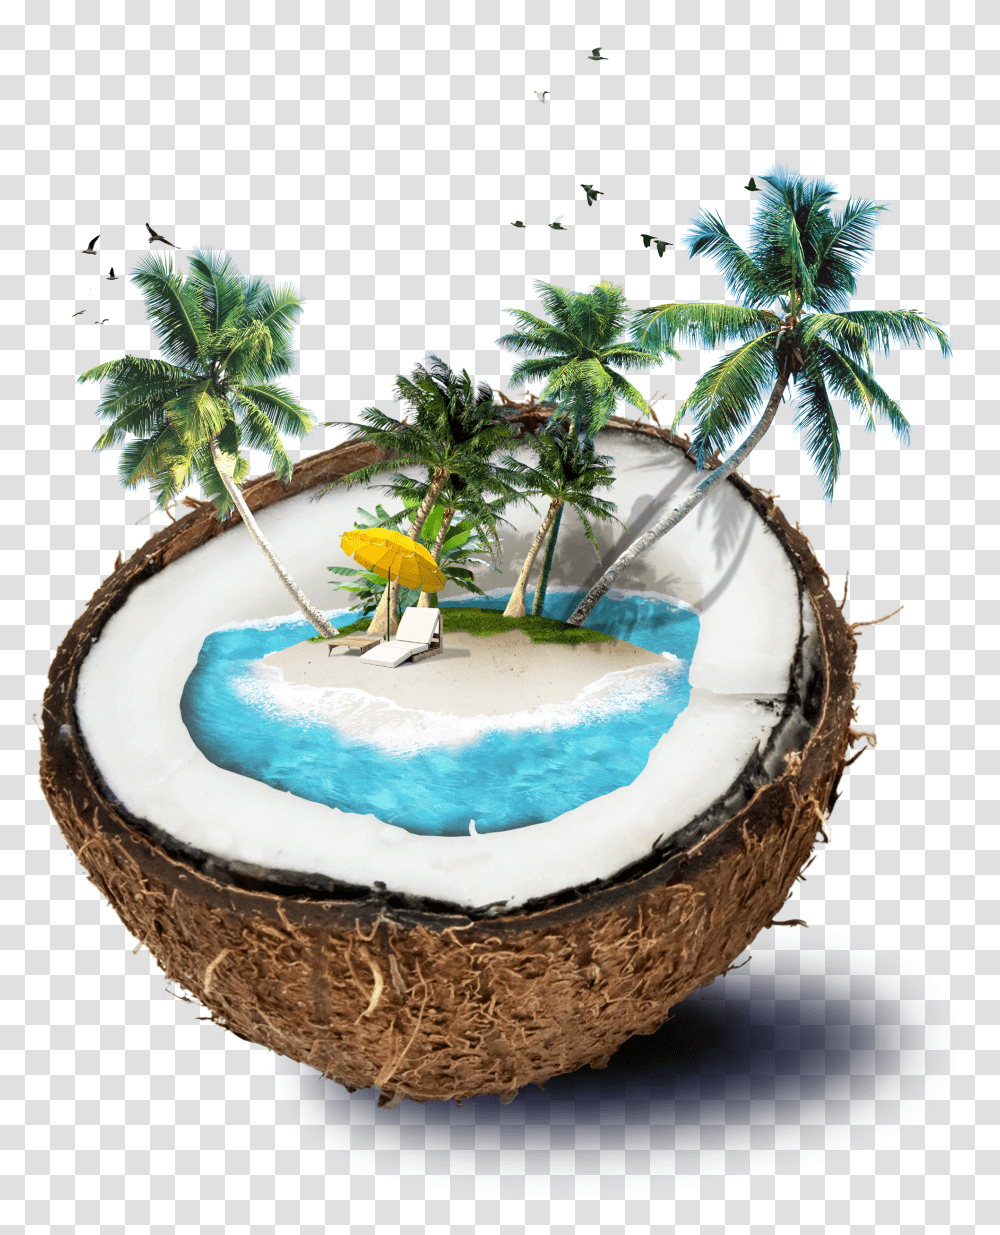 Free Coconut Konfest Coconut Tree Psd Free Download Transparent Png